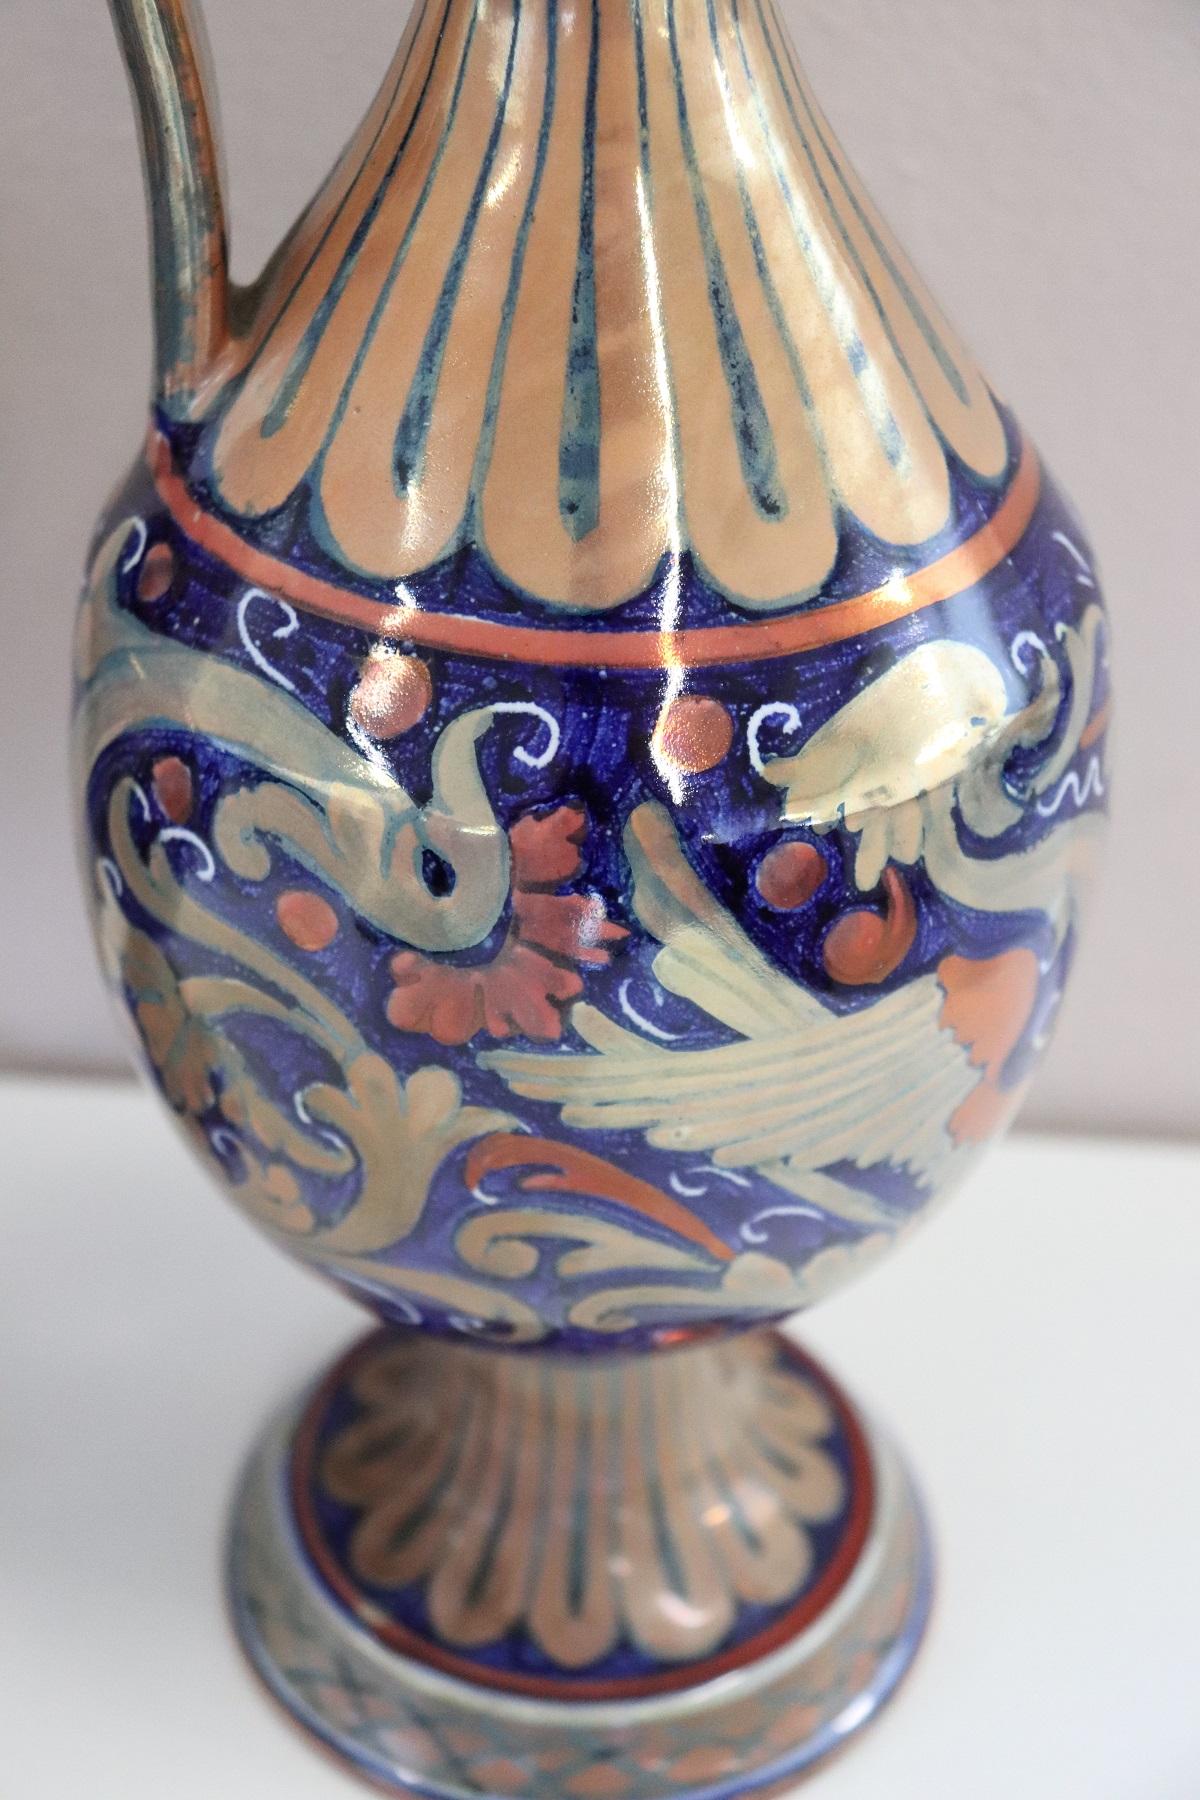 Italian Pair of Majolica Vases with Blue Decorations by Gualdo Tadino, 1920s